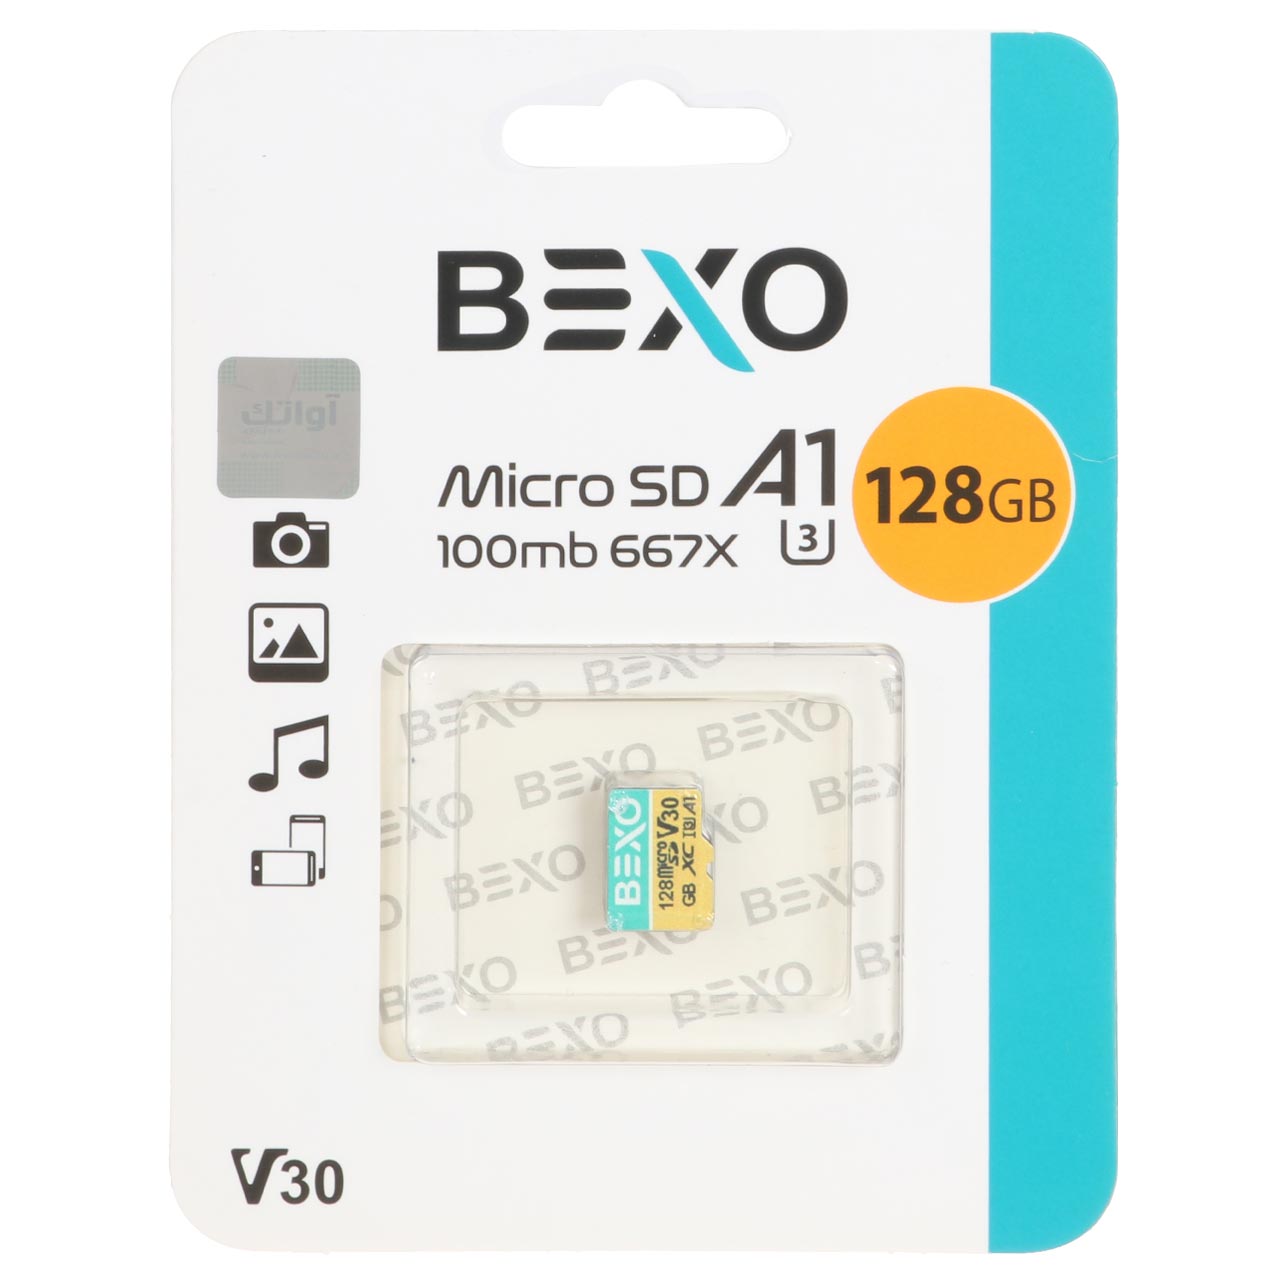 BEXO 667X microSDXC UHS-I U1 Class10-100MB/s - 128GB (گارانتی داده پردازی آواتک)